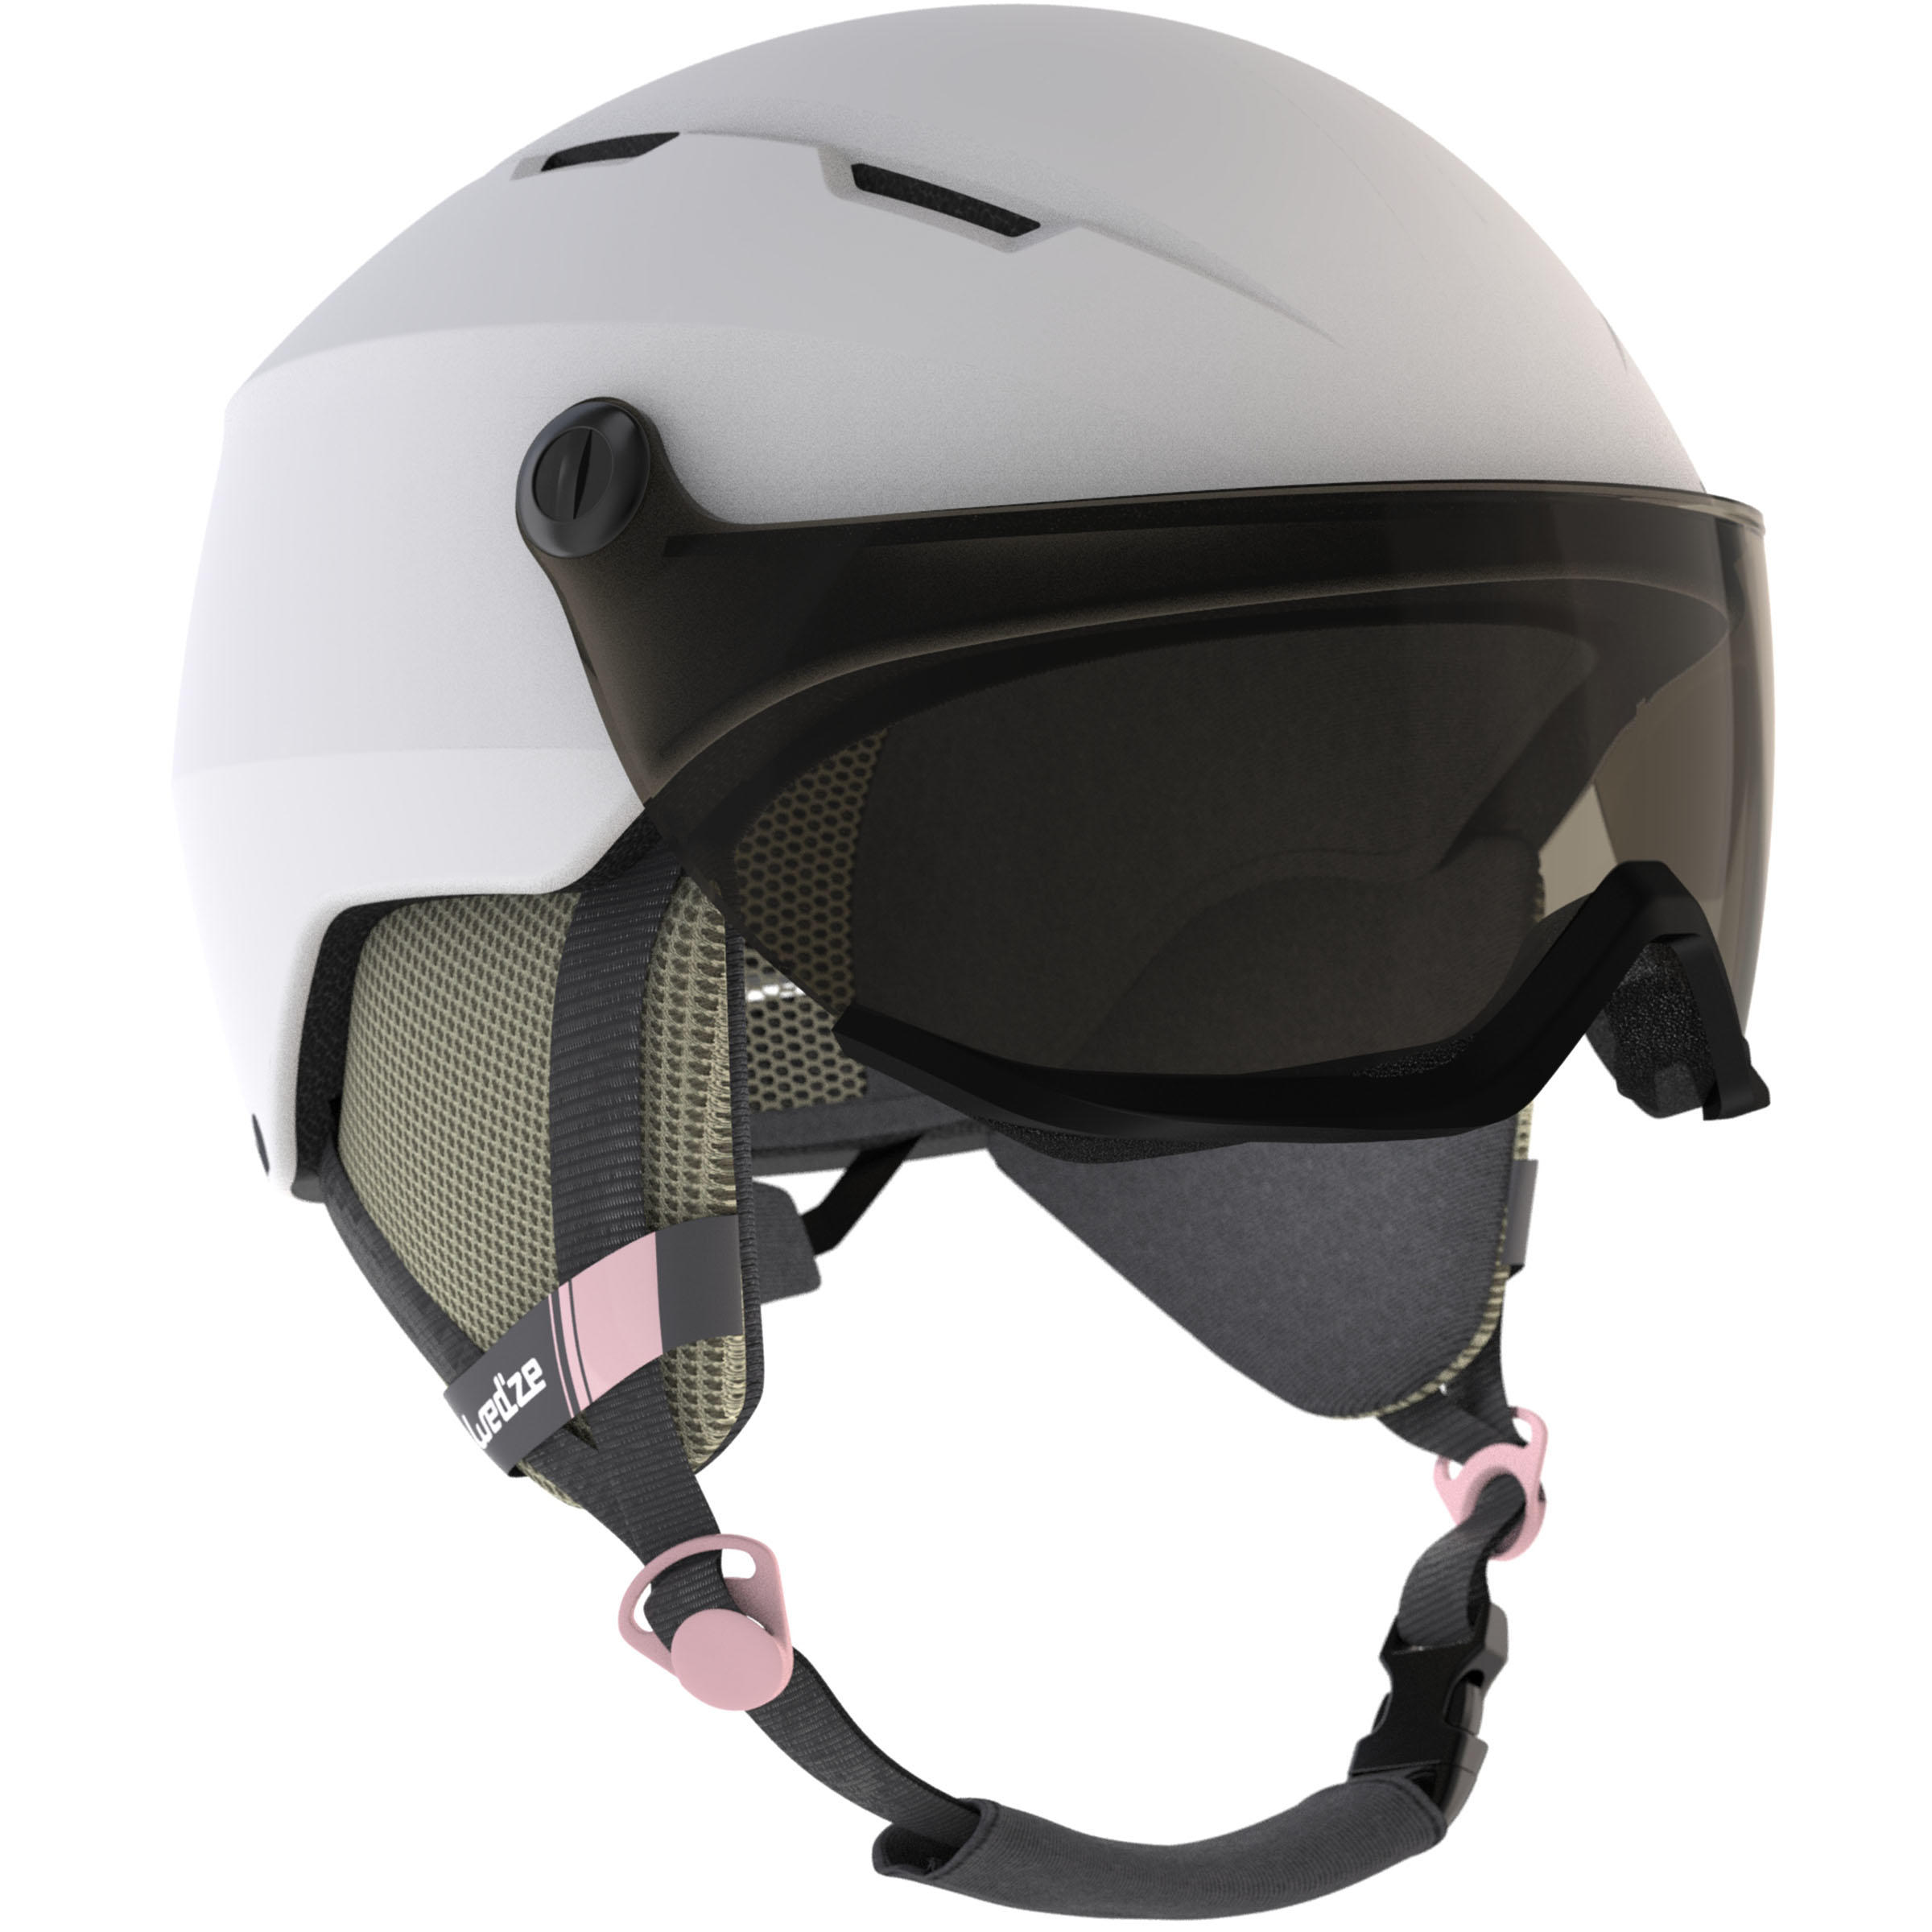 WEDZE H350 Adult's Ski Helmet with bad weather visor (S1) - White.